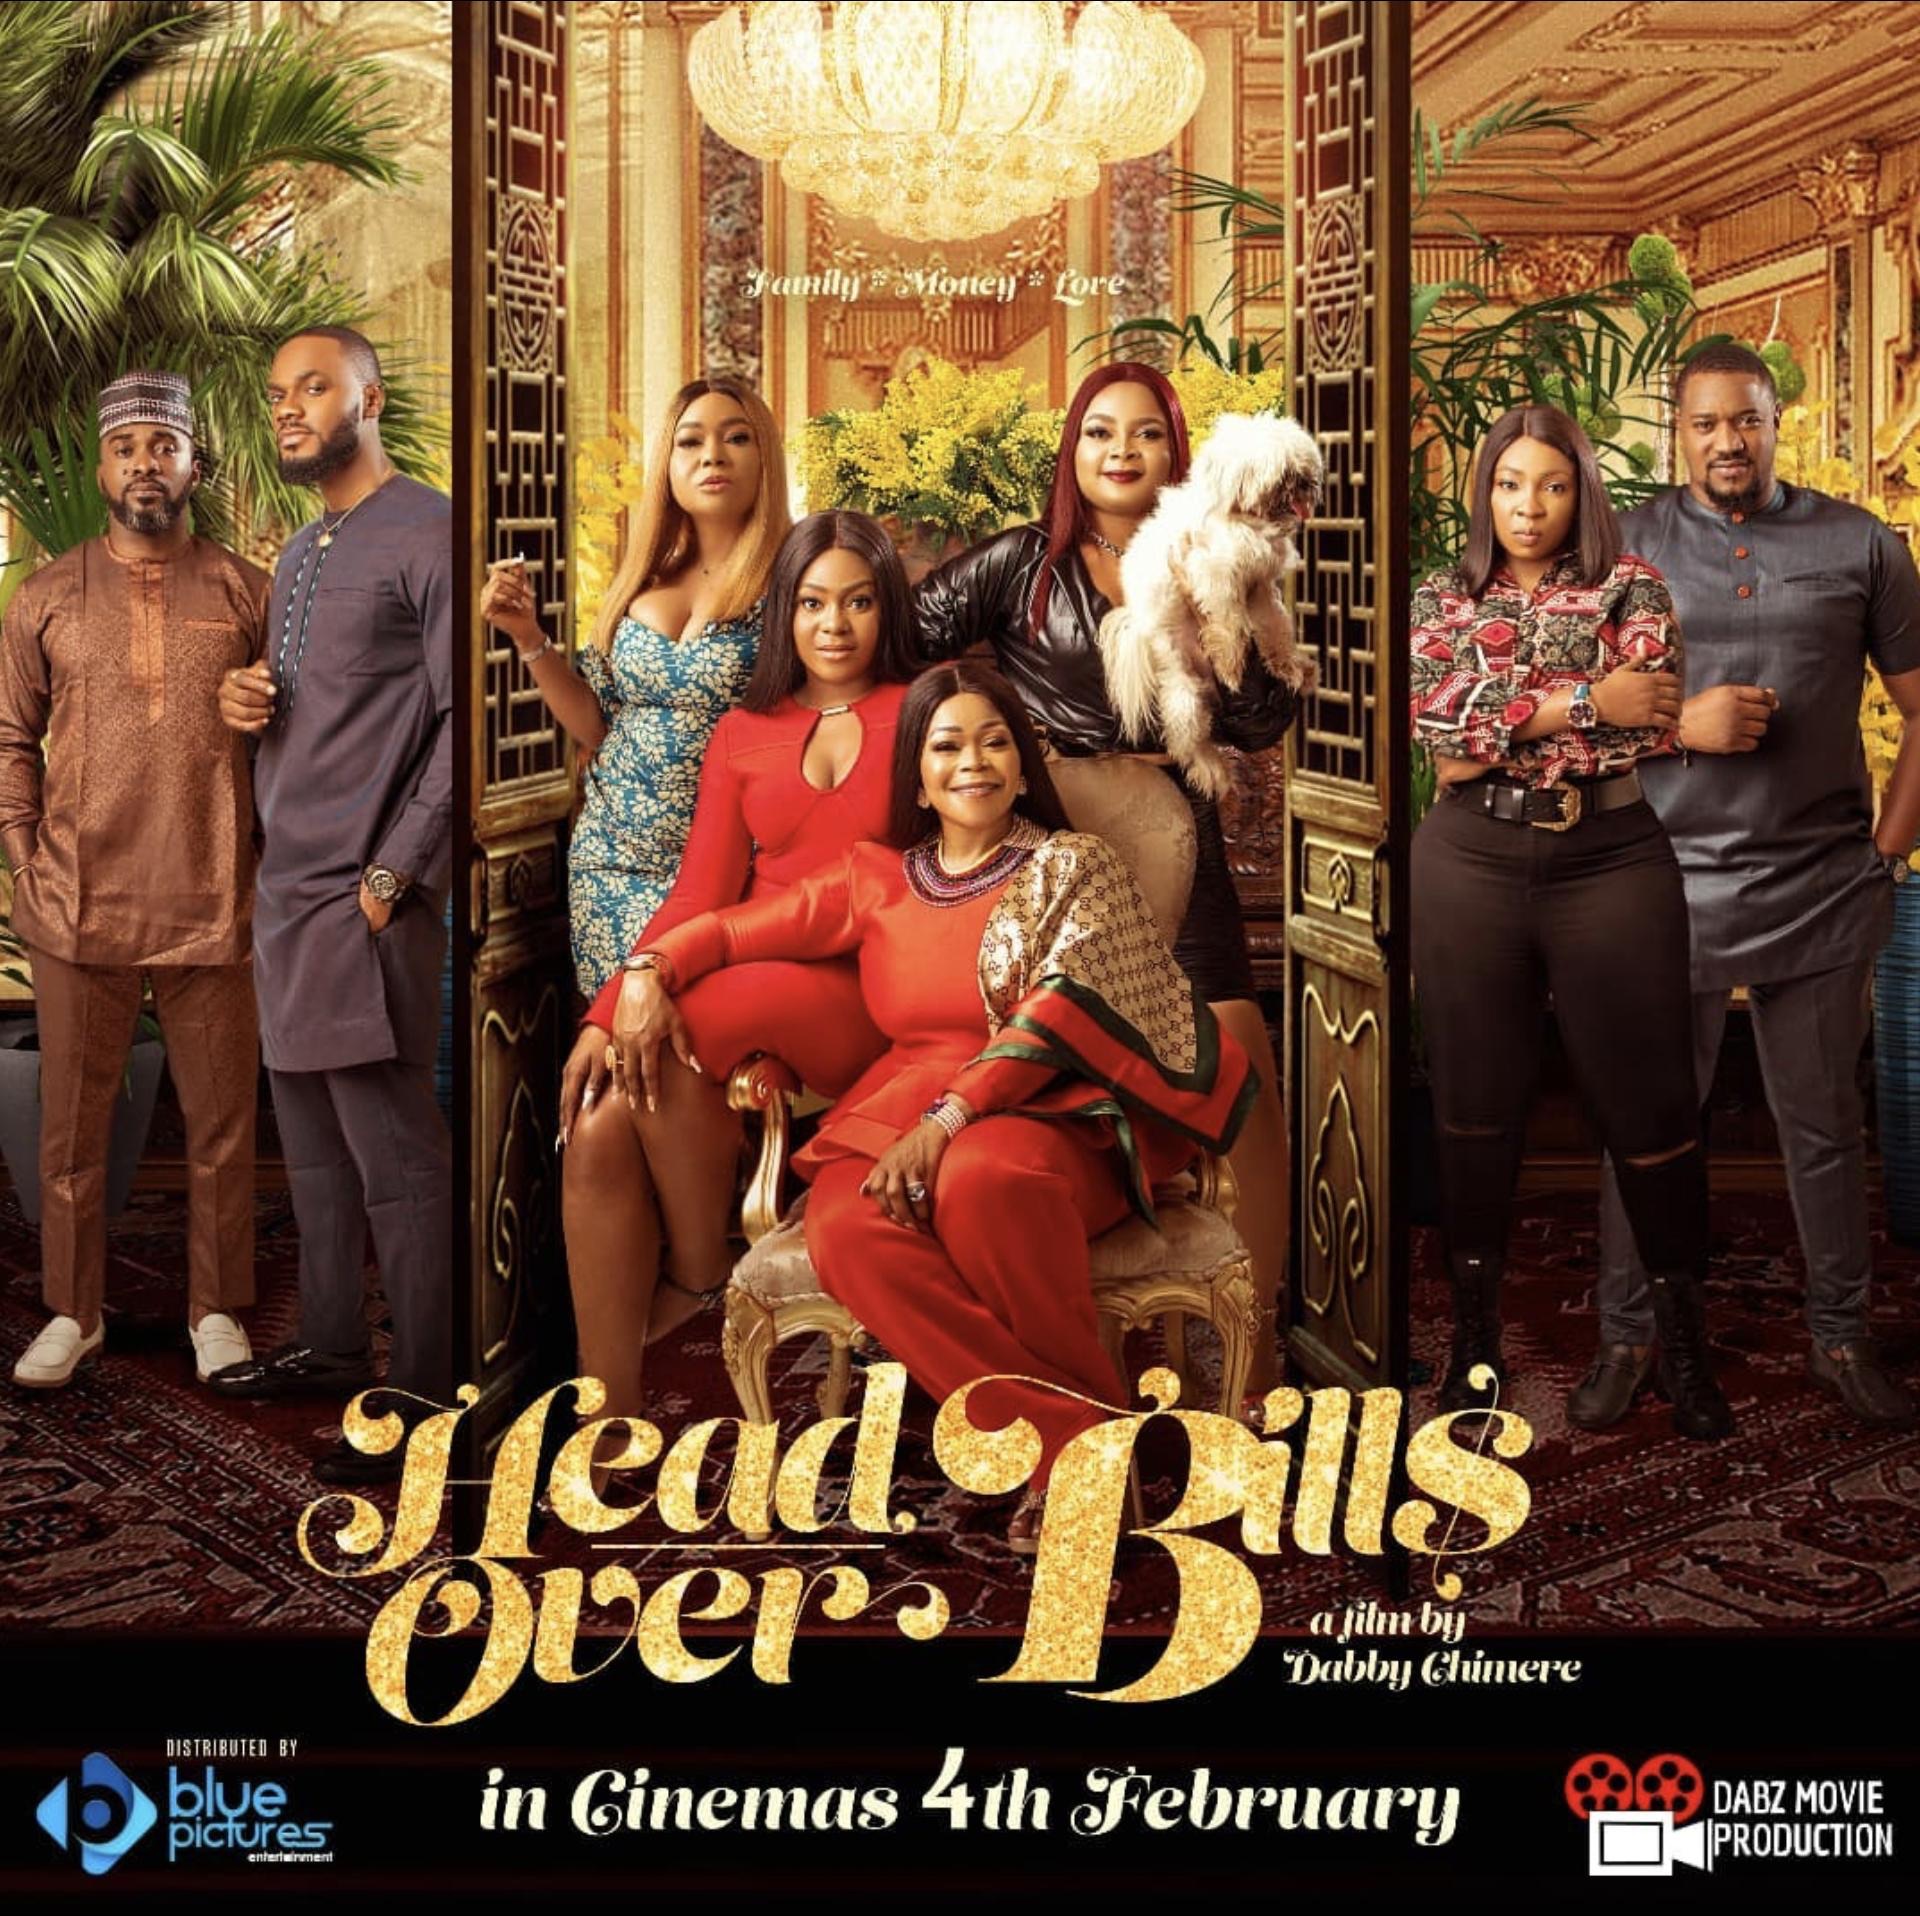 Download Nollywood movie: Head Over Bills (2022)